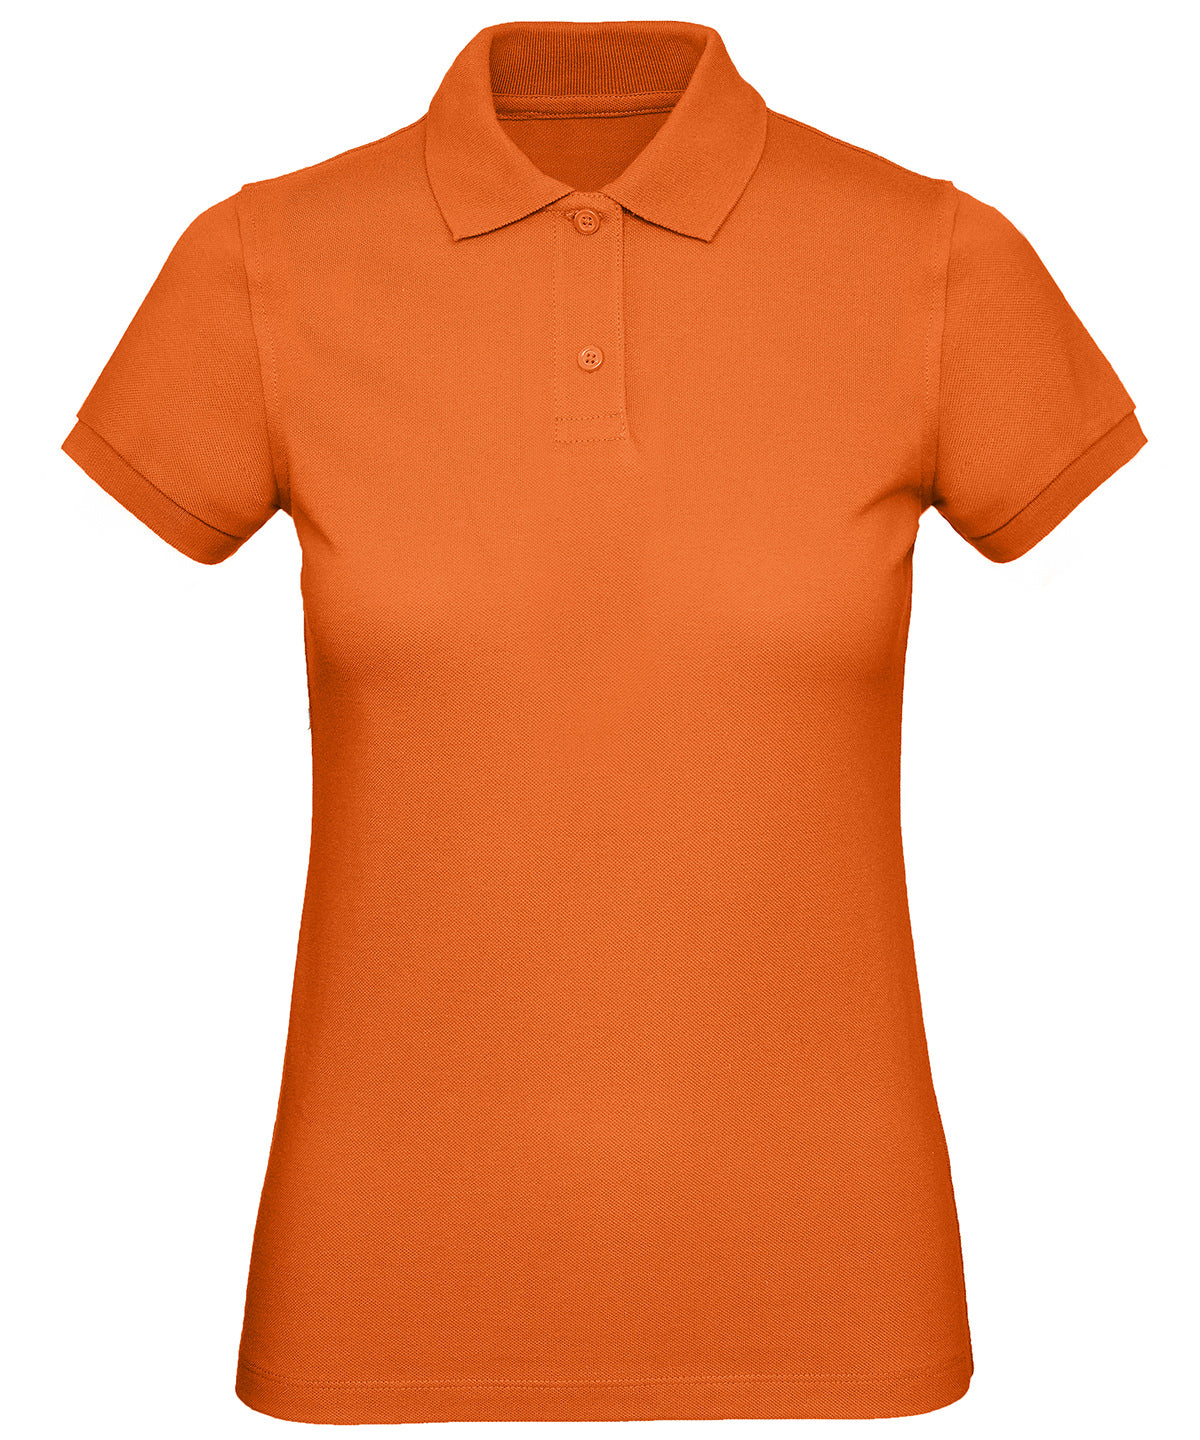 B&C Collection Inspire Polo Women - Urban Orange